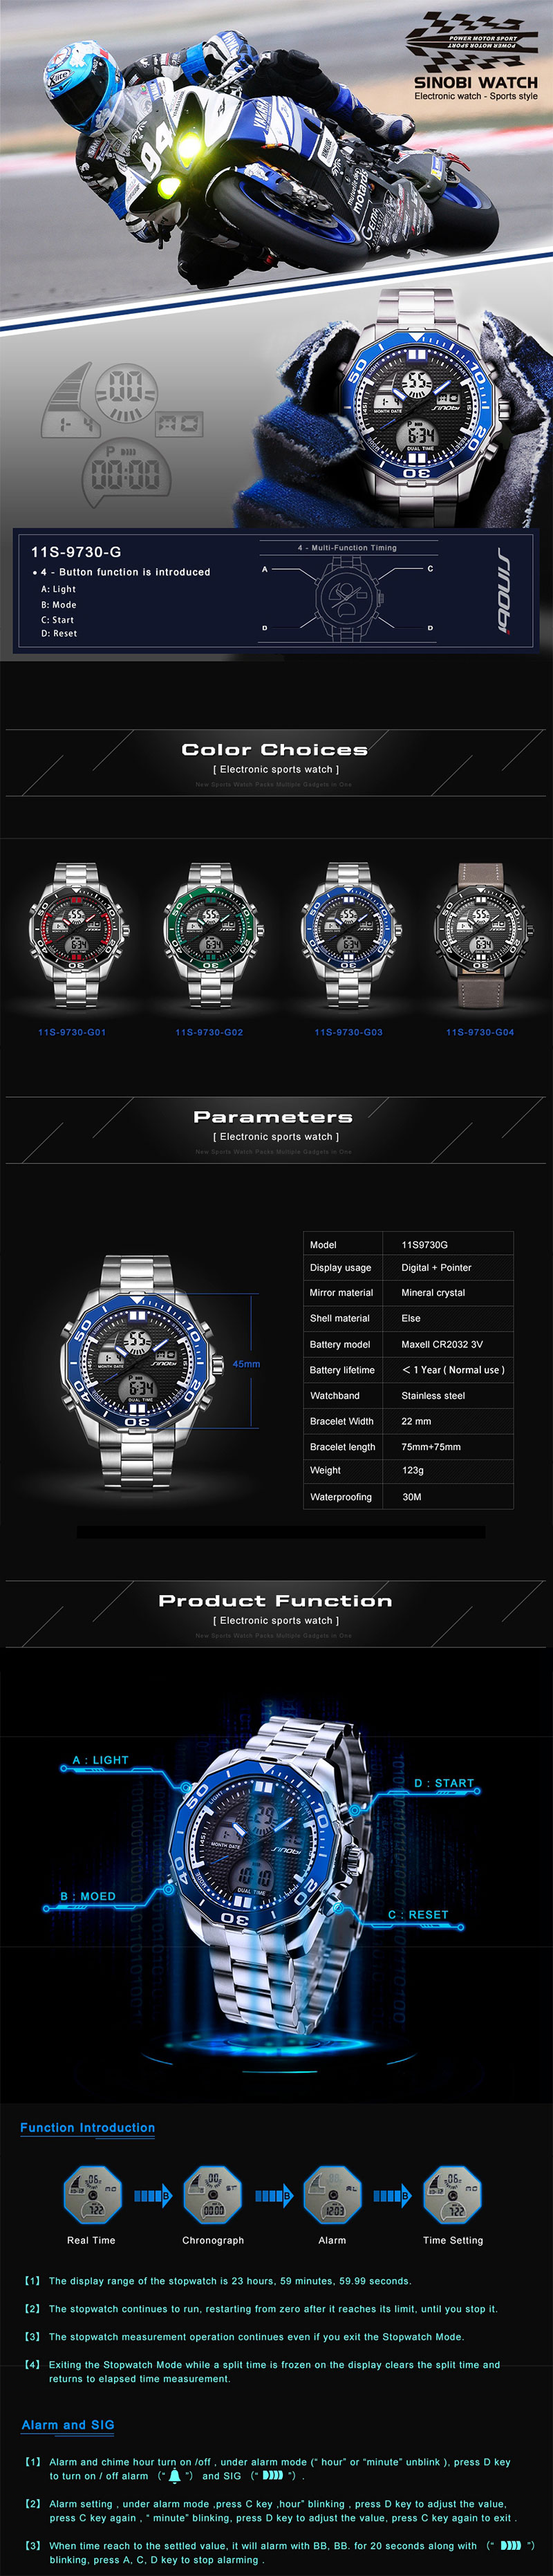 SINOBI-9730-Dual-Display-Digital-Watch-Fashion-Leather-Strap-Men-Luminous-Display-Sport-Watch-1388362